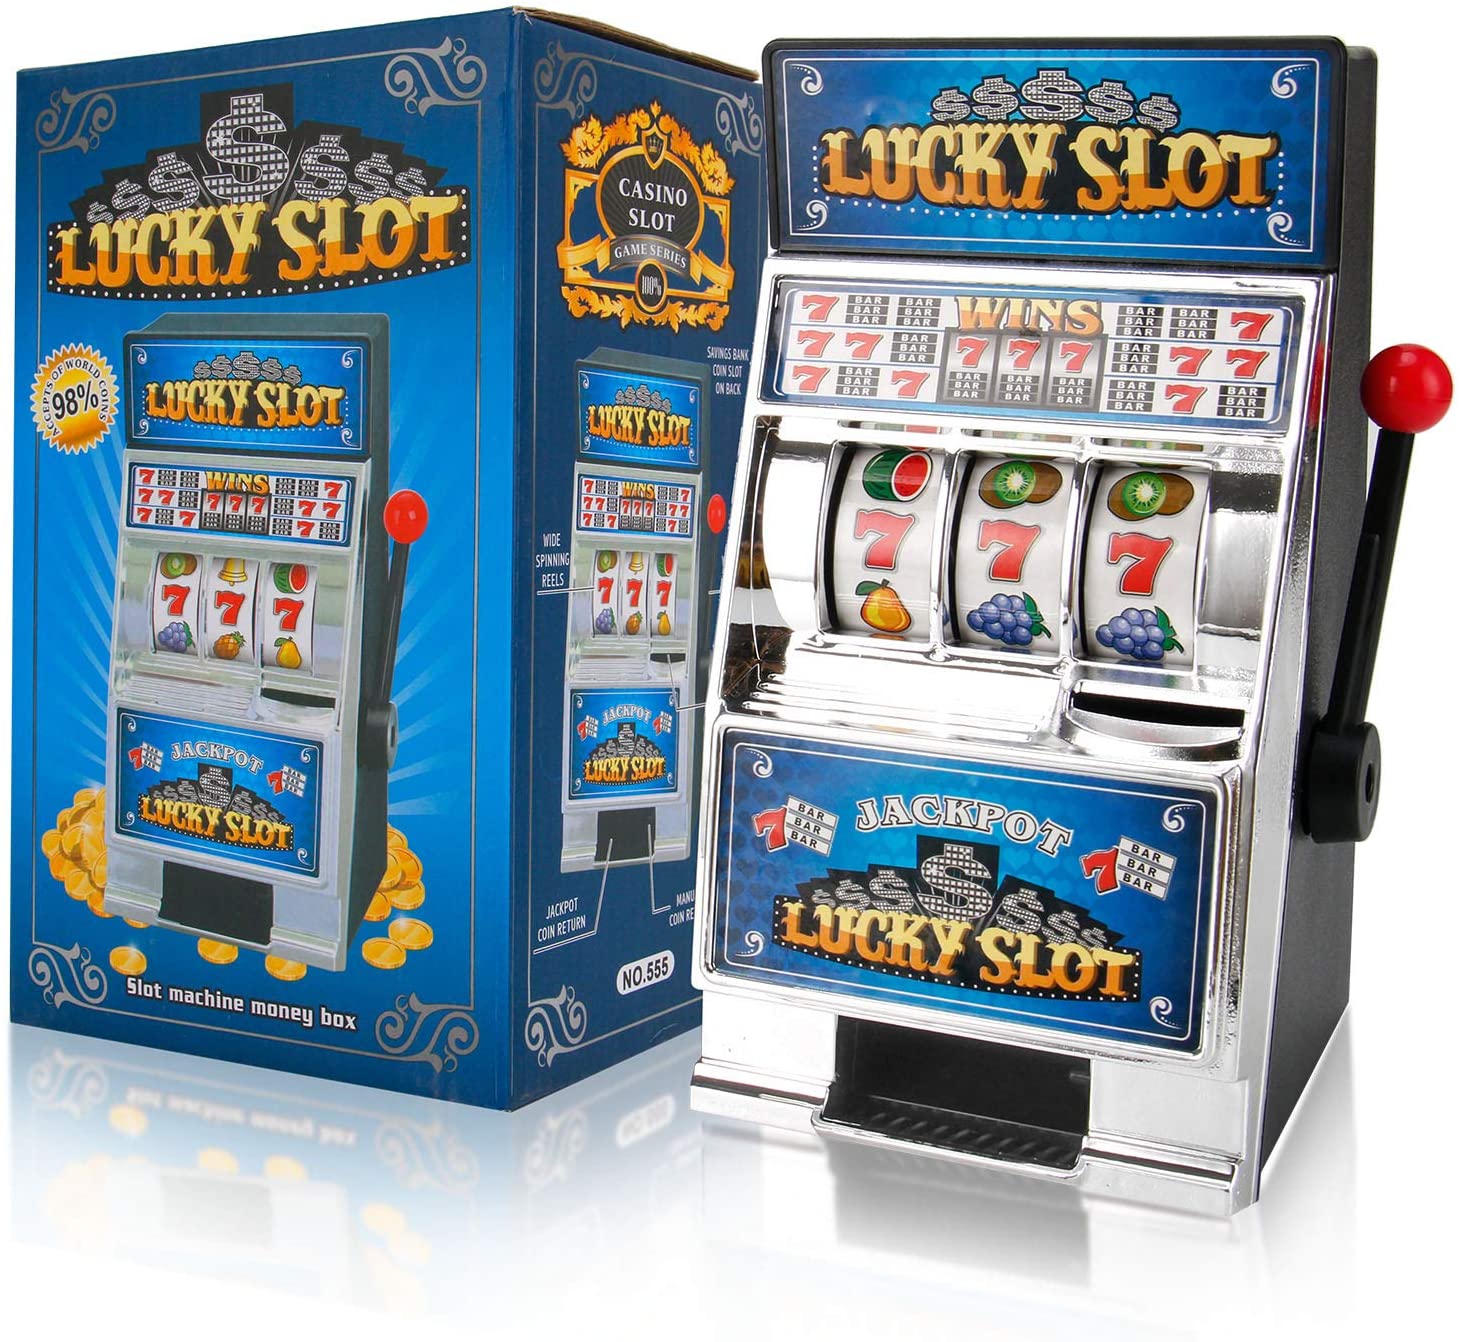 New winning slot machines videos